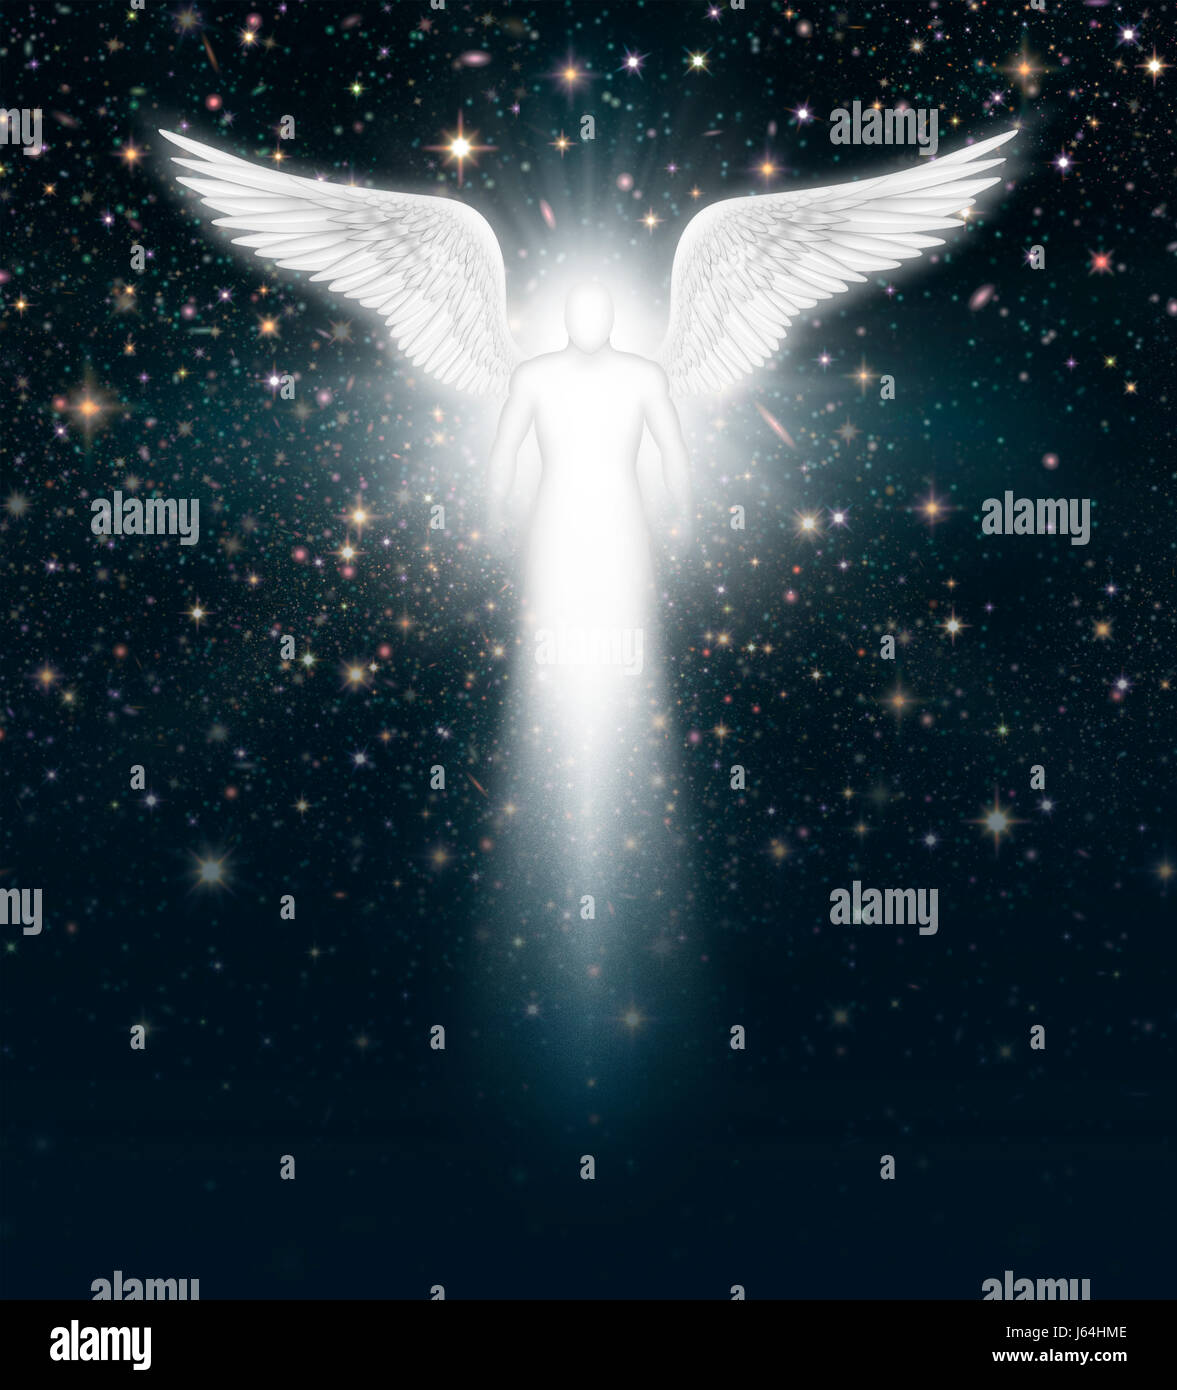 Digital illustration of an angel in the night sky full of stars. Stock Photo